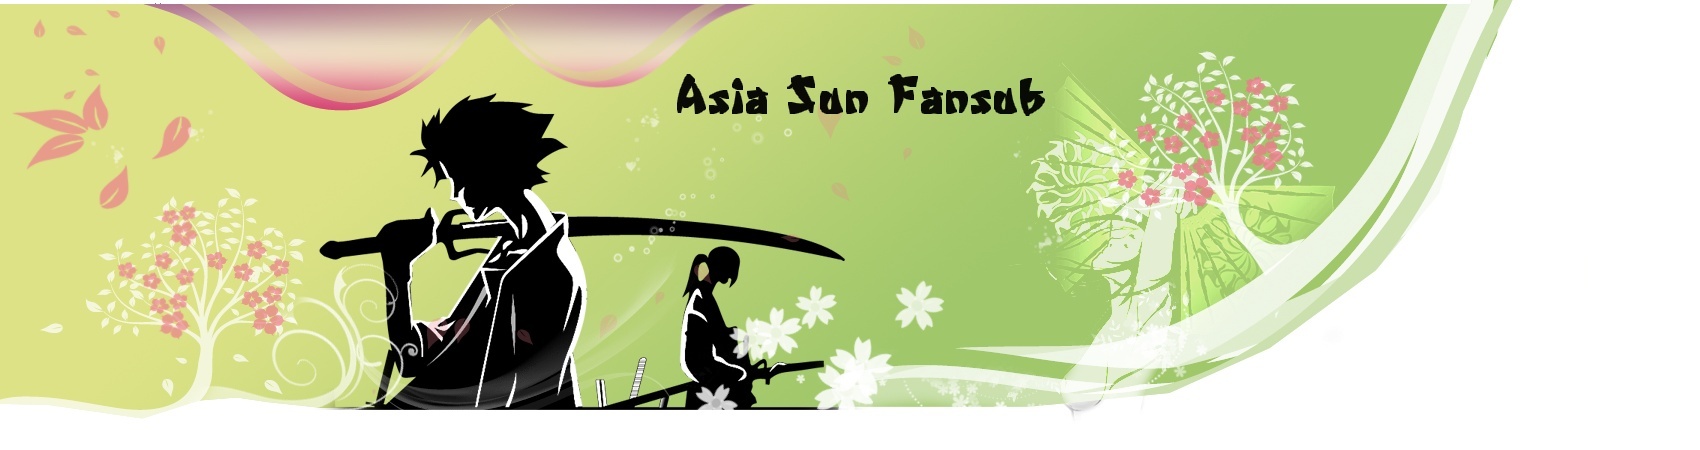 Asia Sun Fansub